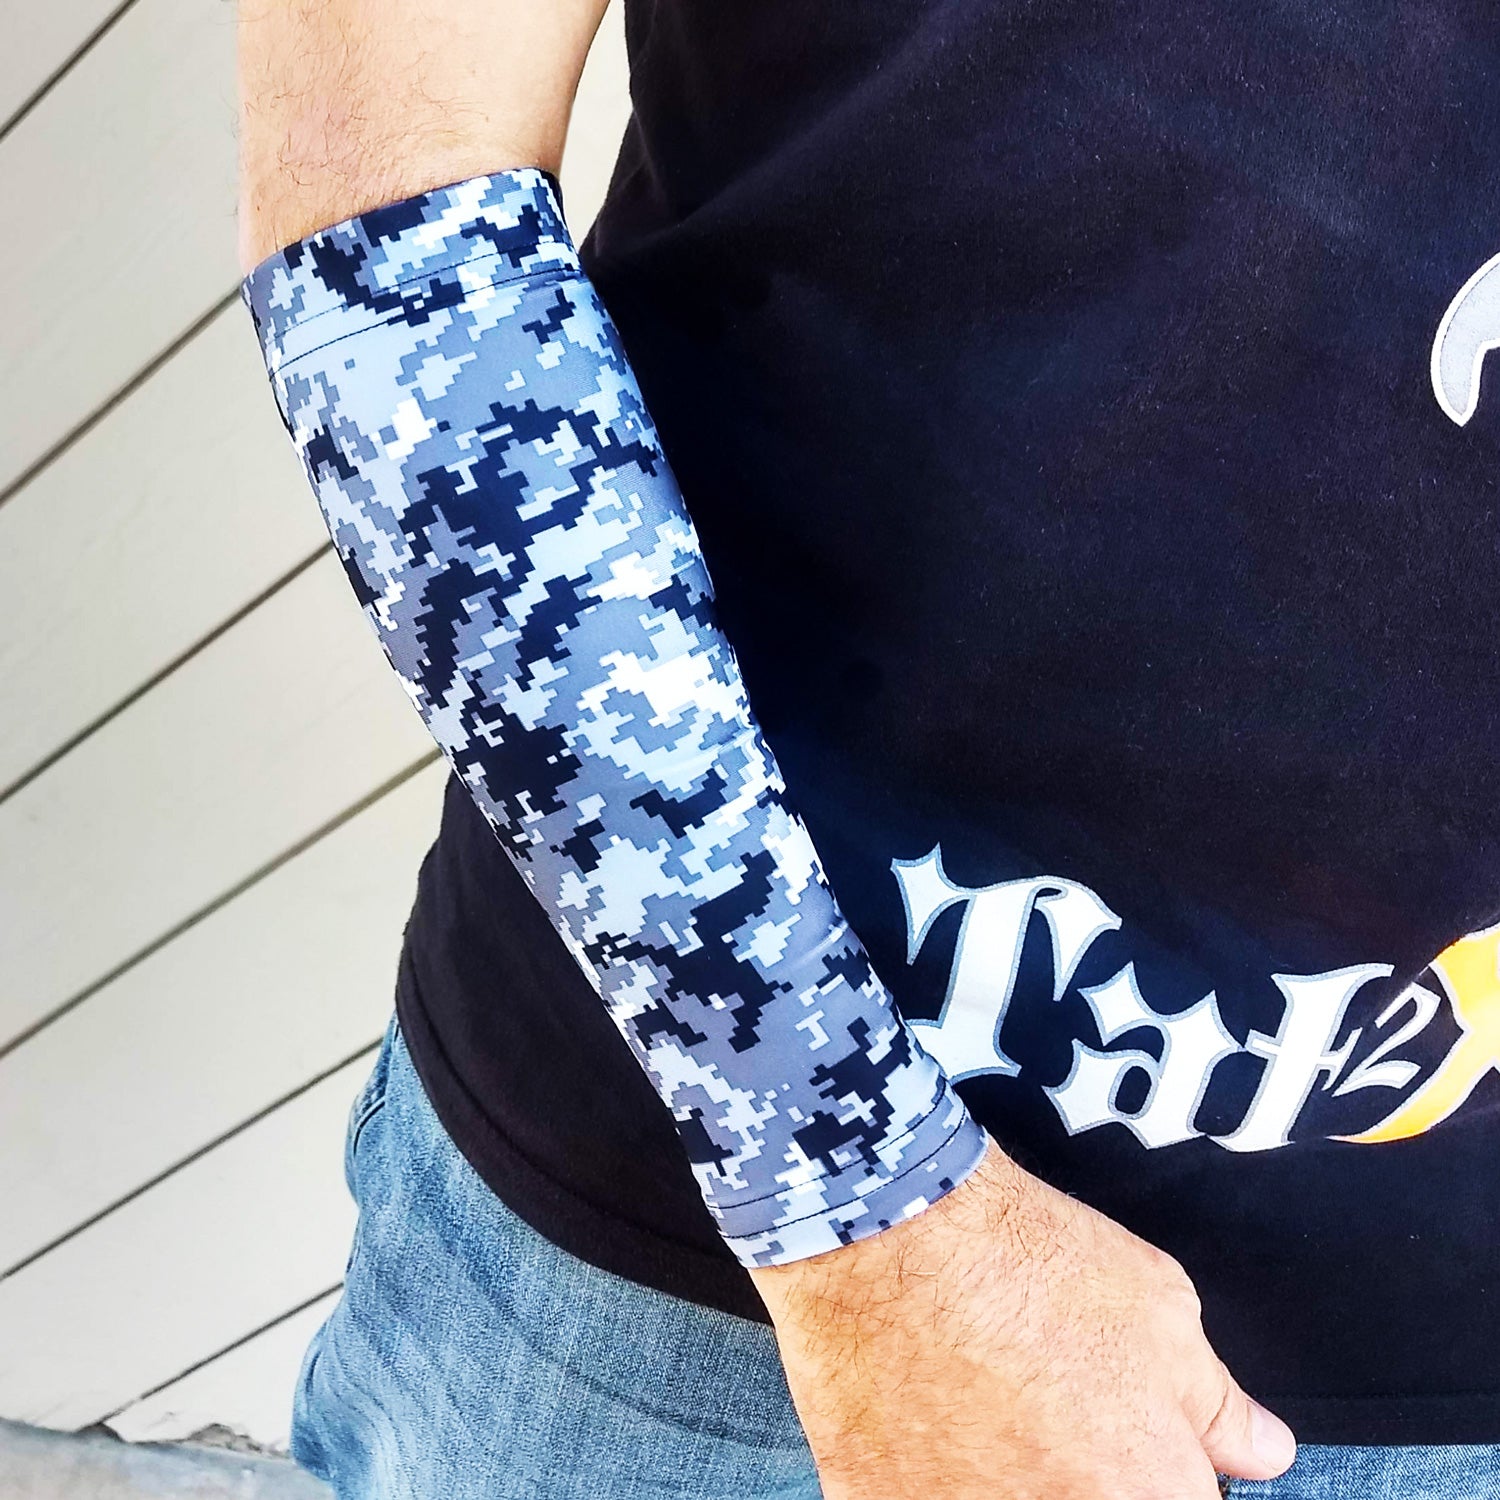 Ink Armor Tattoo Cover Up Sleeve - Full Arm Sleeve (Grey Camo)